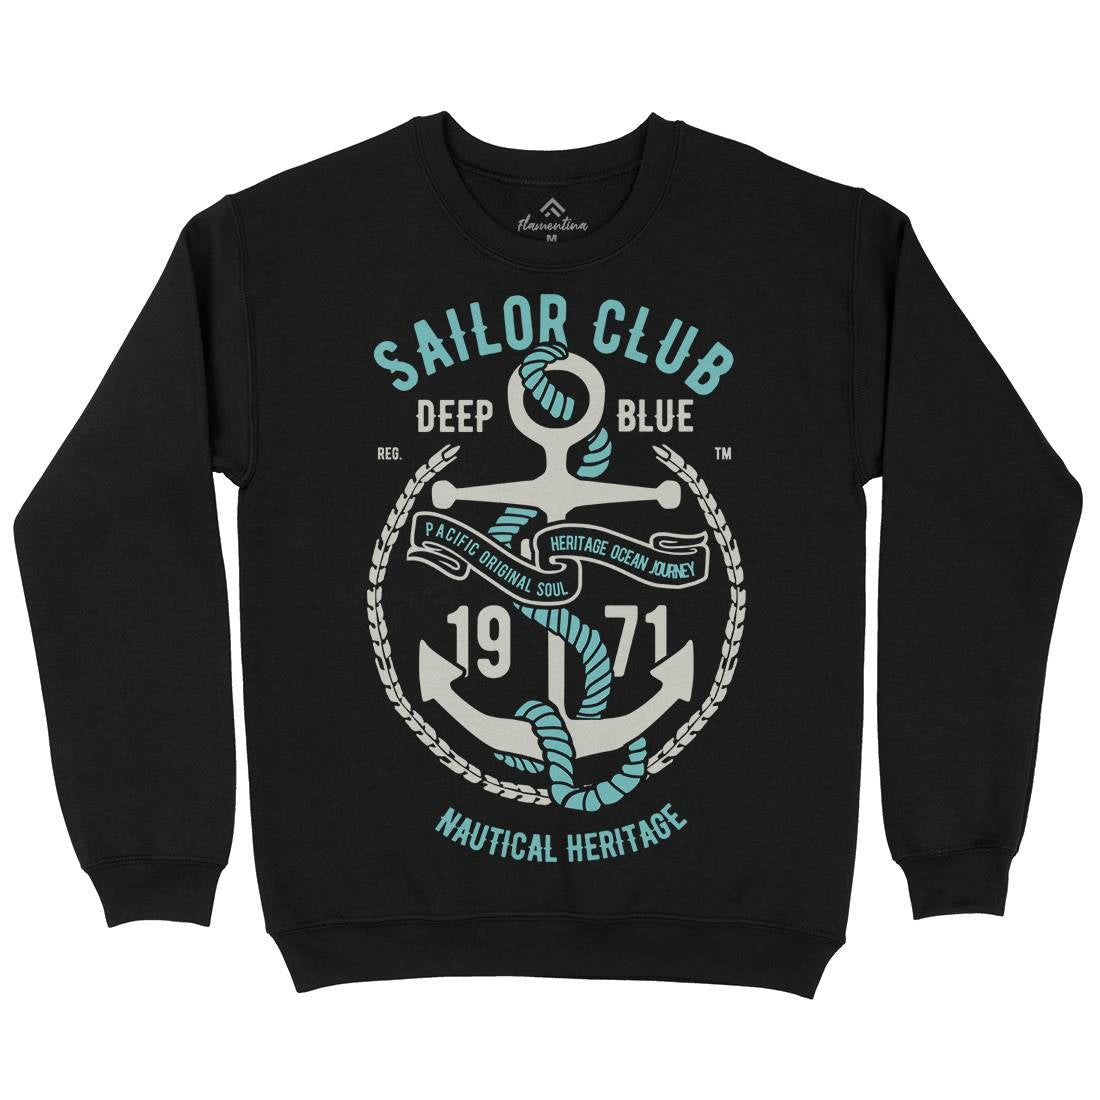 Sailor Club Kids Crew Neck Sweatshirt Navy B445